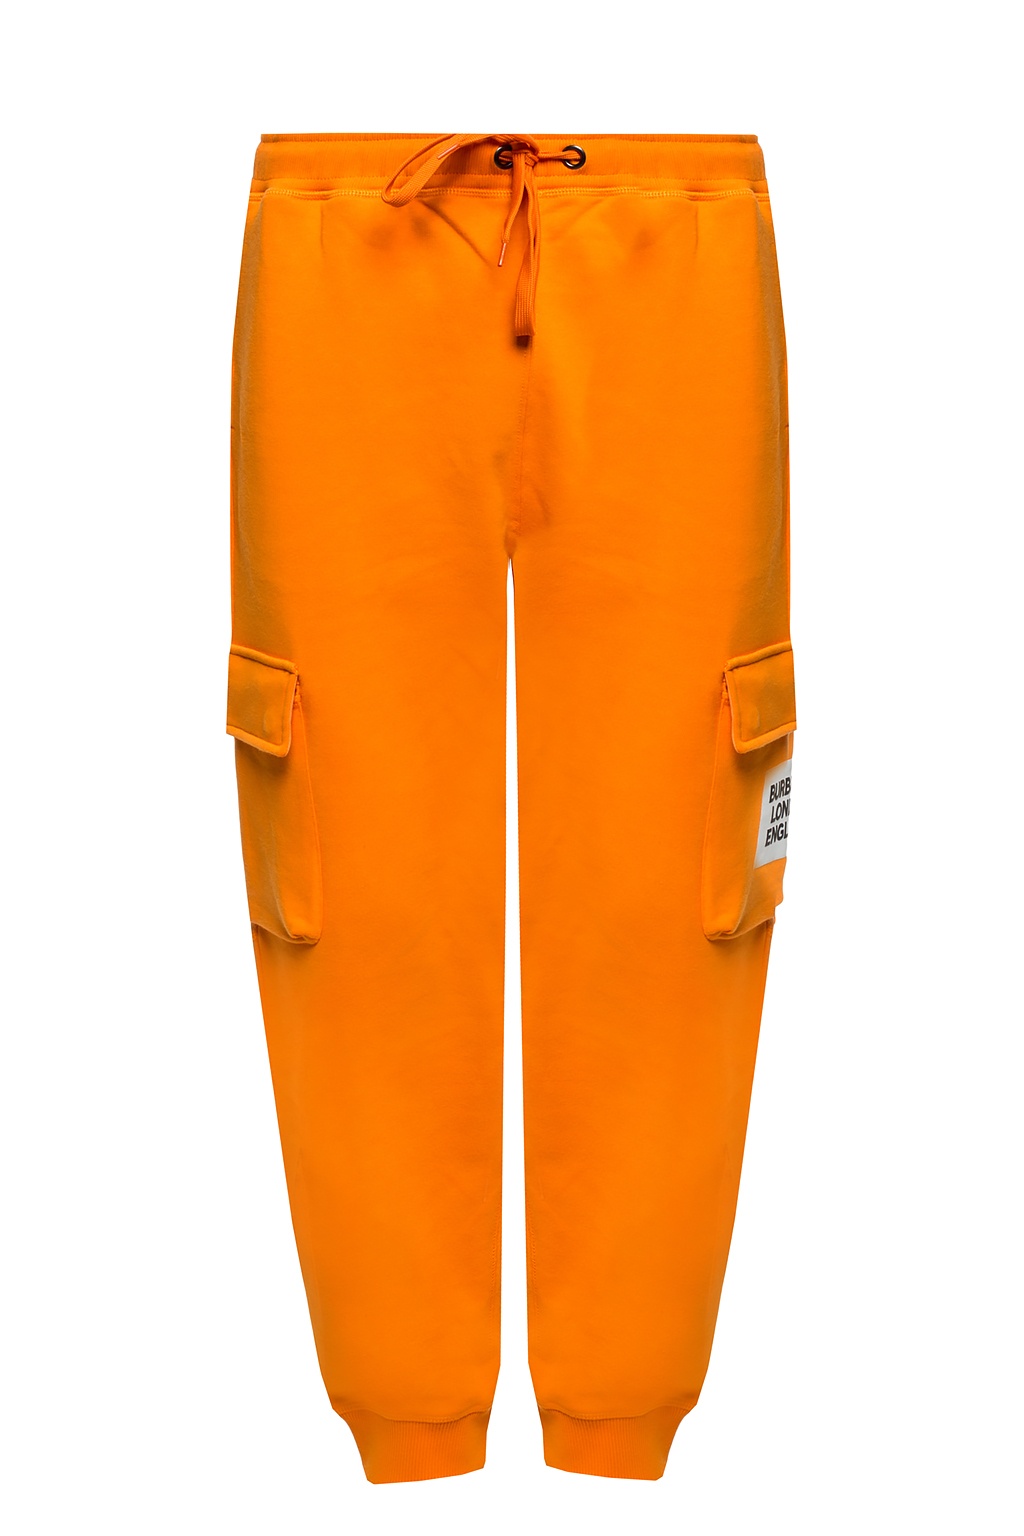 burberry orange sweatpants